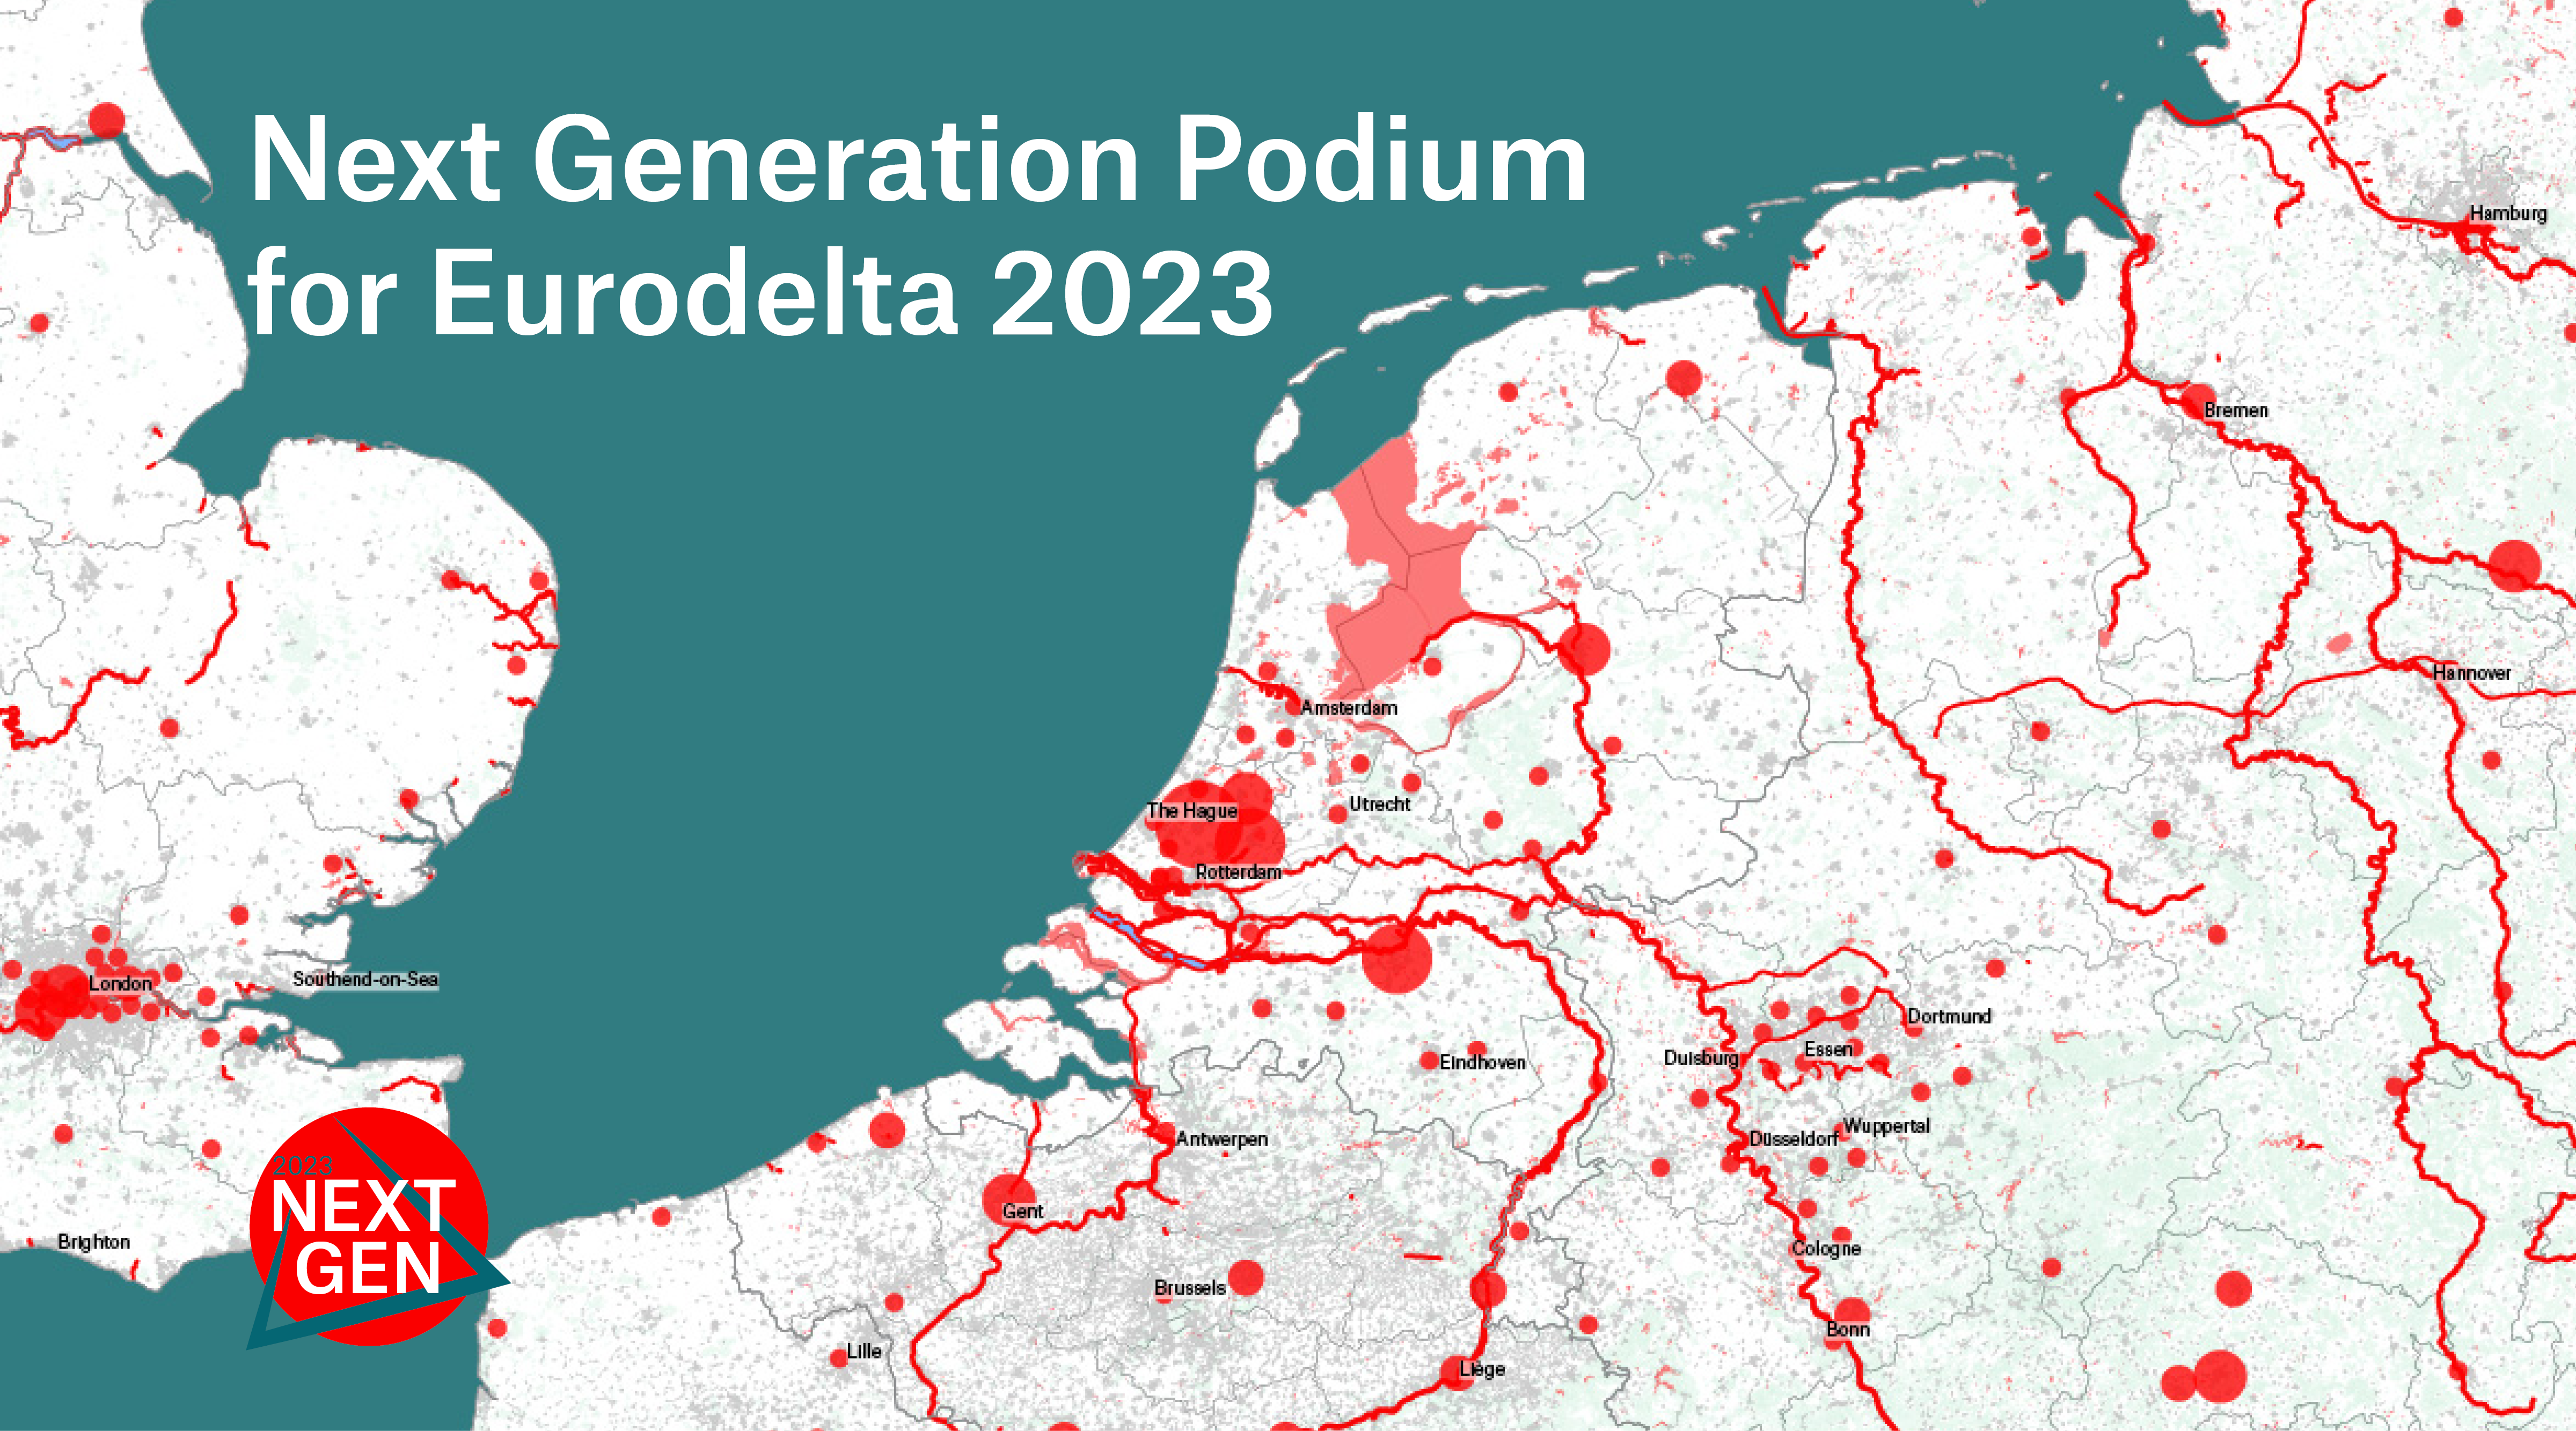 Next Generation Podium for Eurodelta